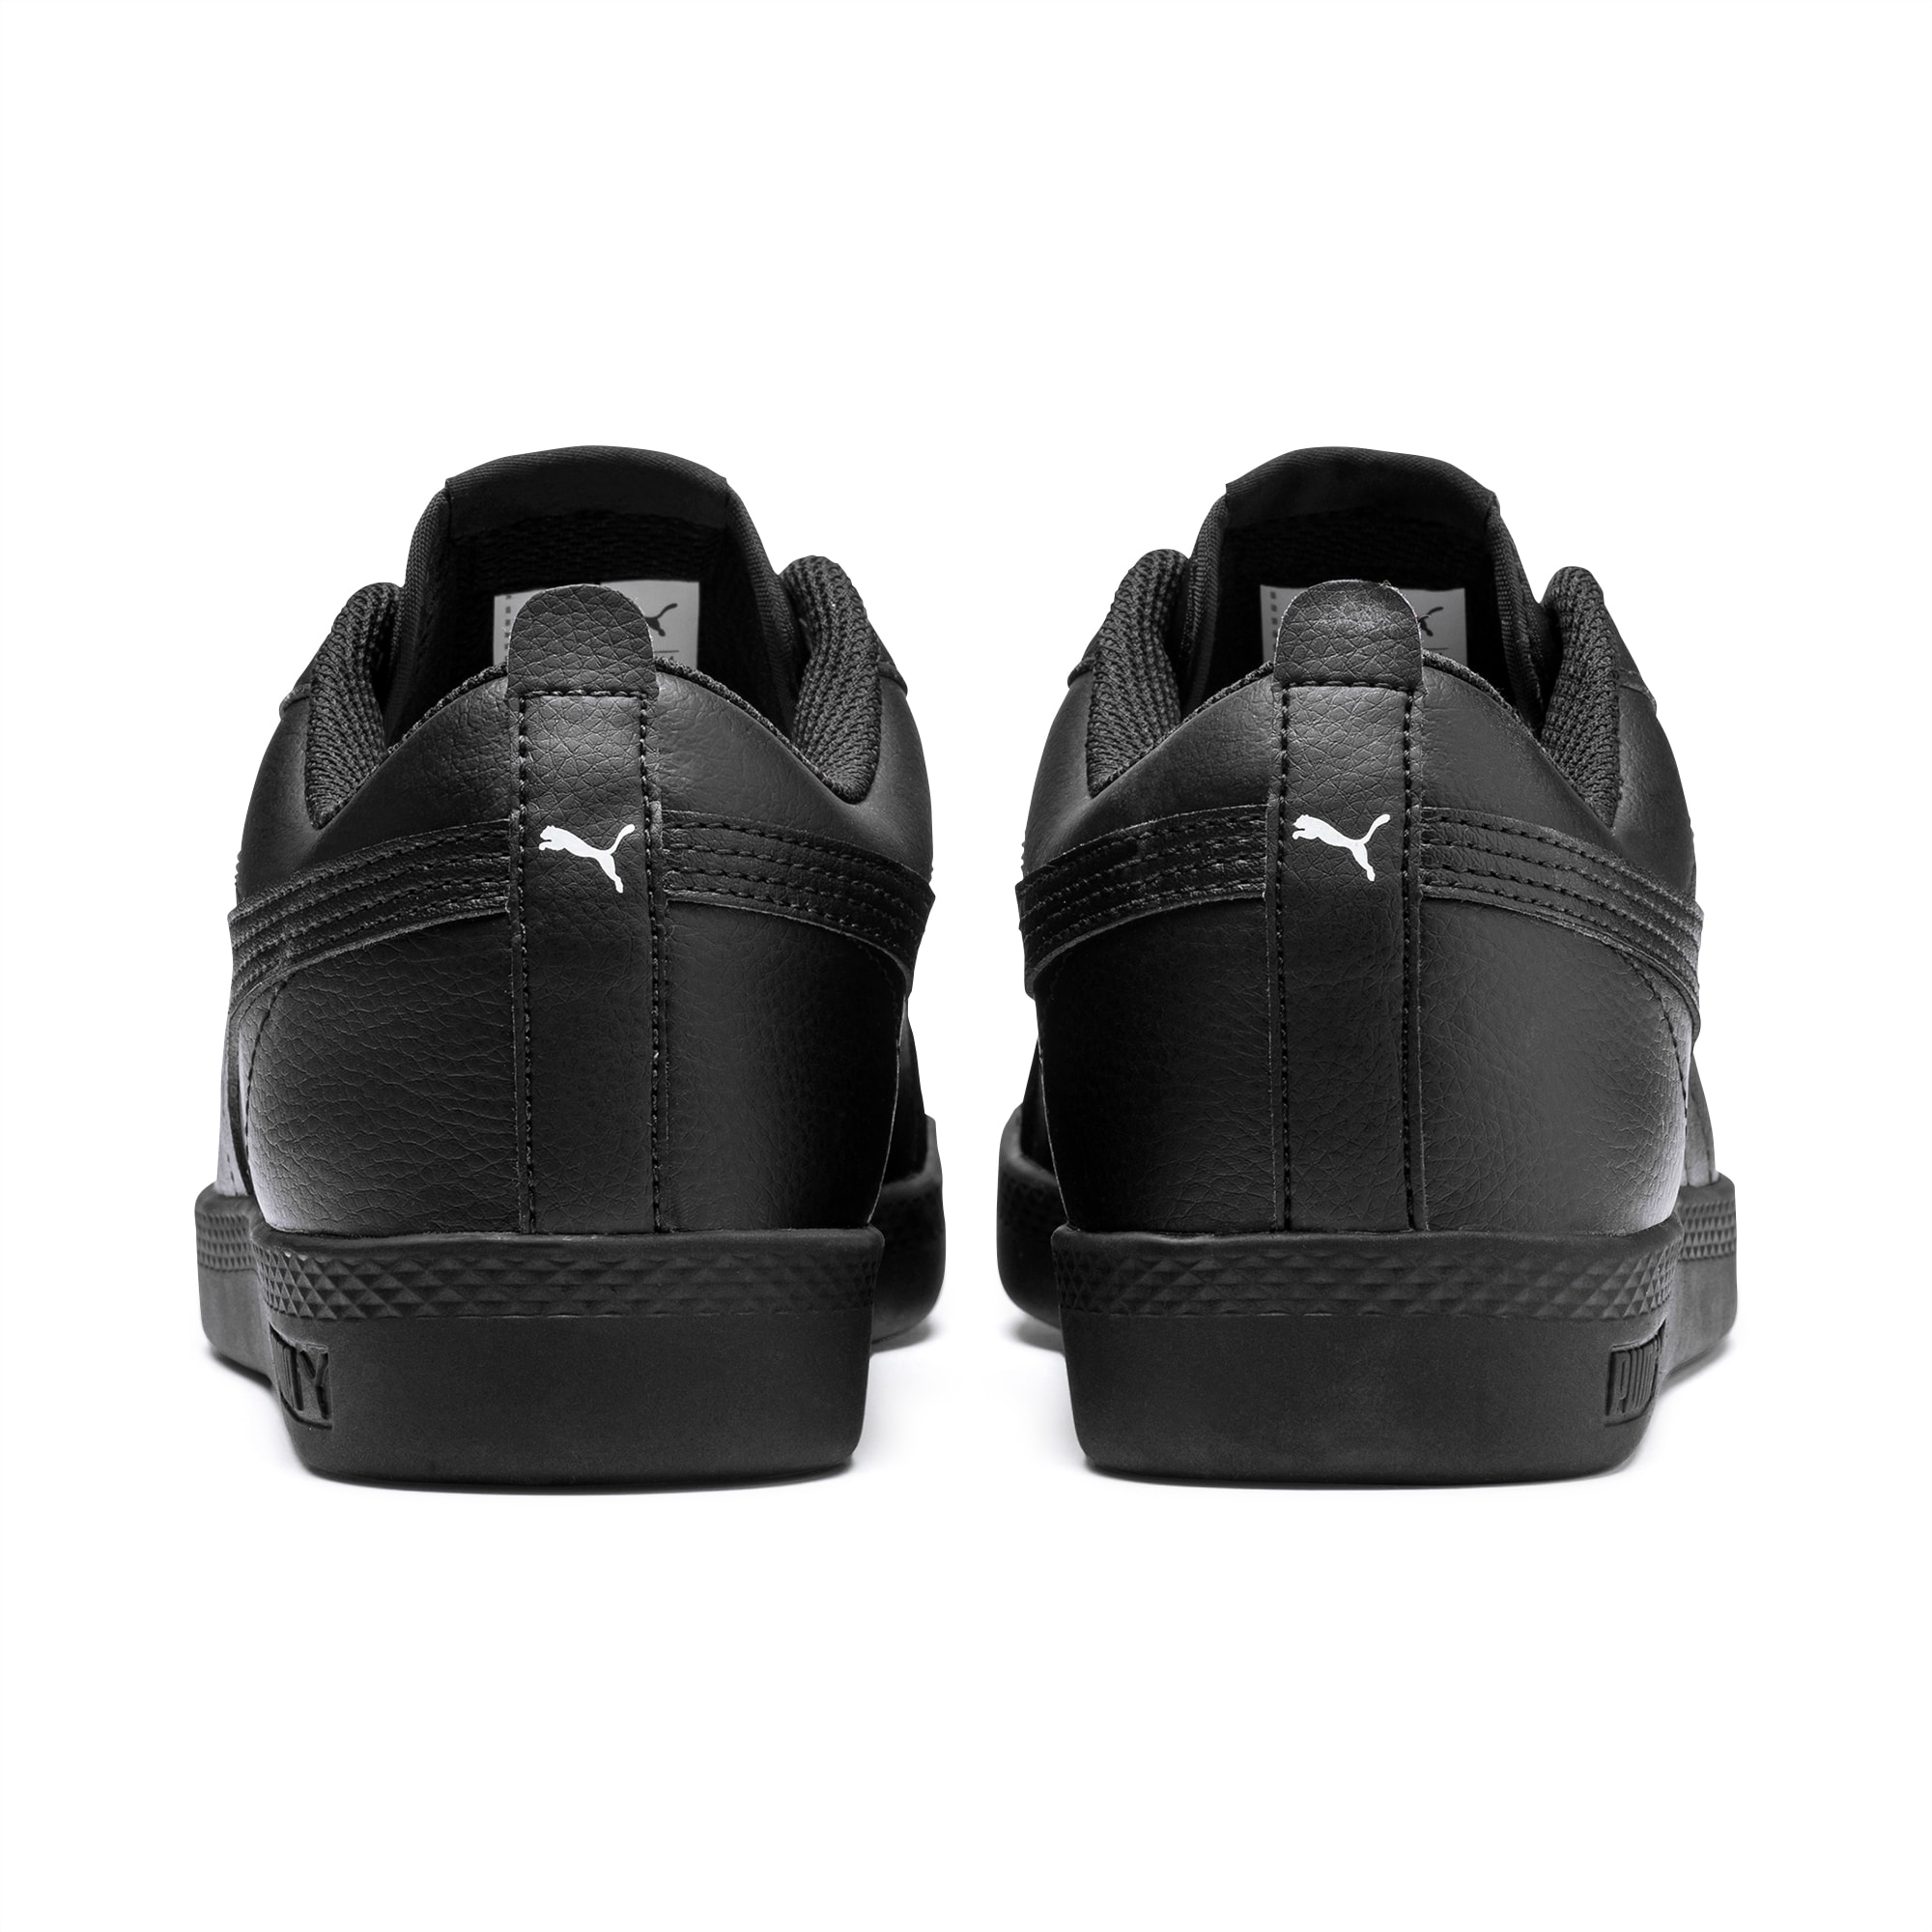 PUMA Smash V2 Leather Women's Trainers, Black, Size 35,5, Shoes